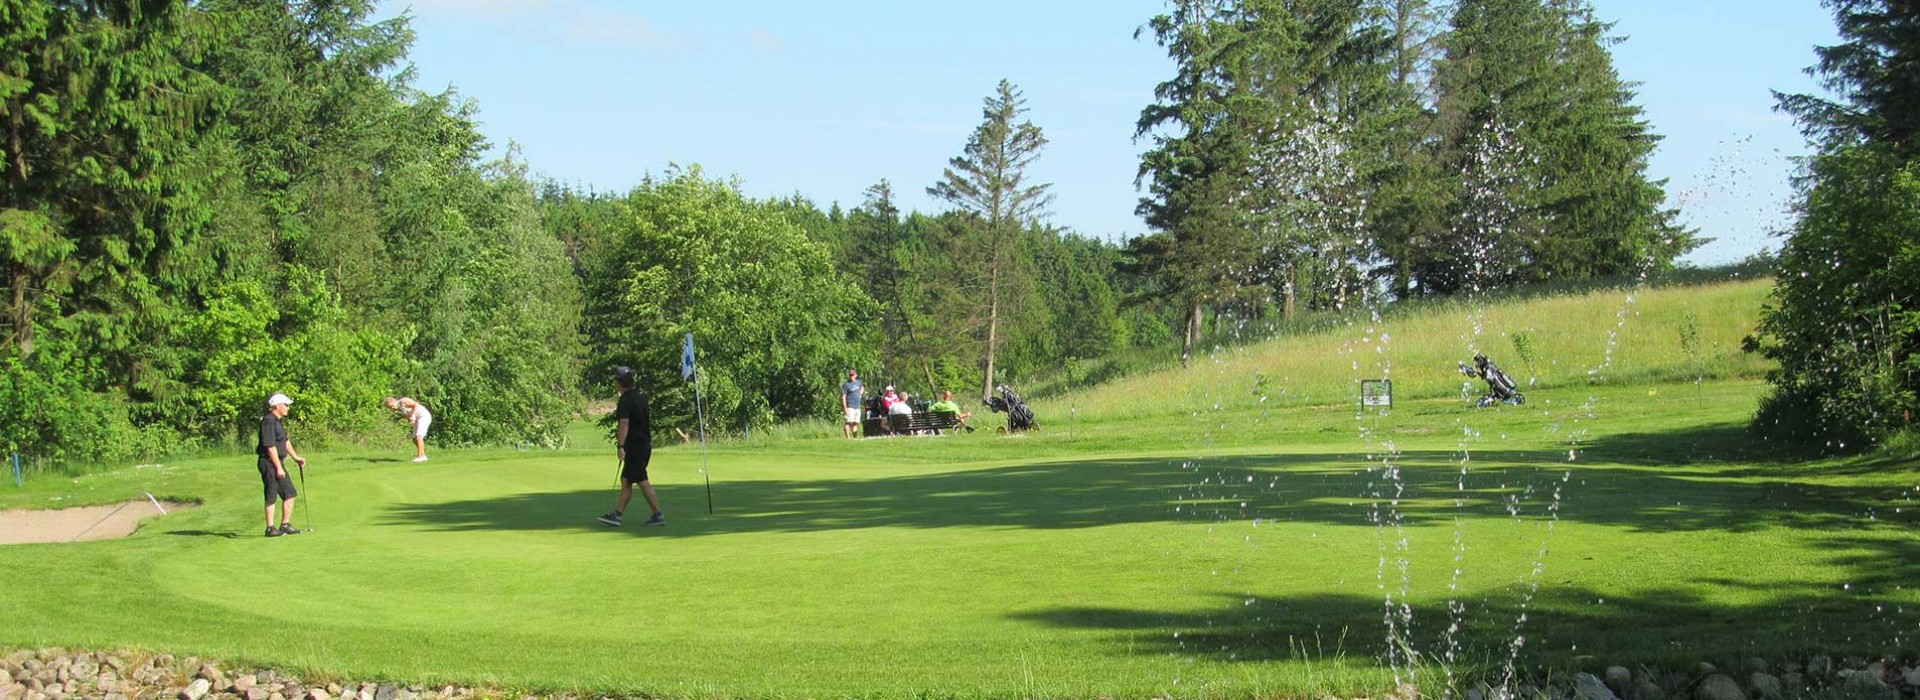 Sindal Golf Klub hul 18